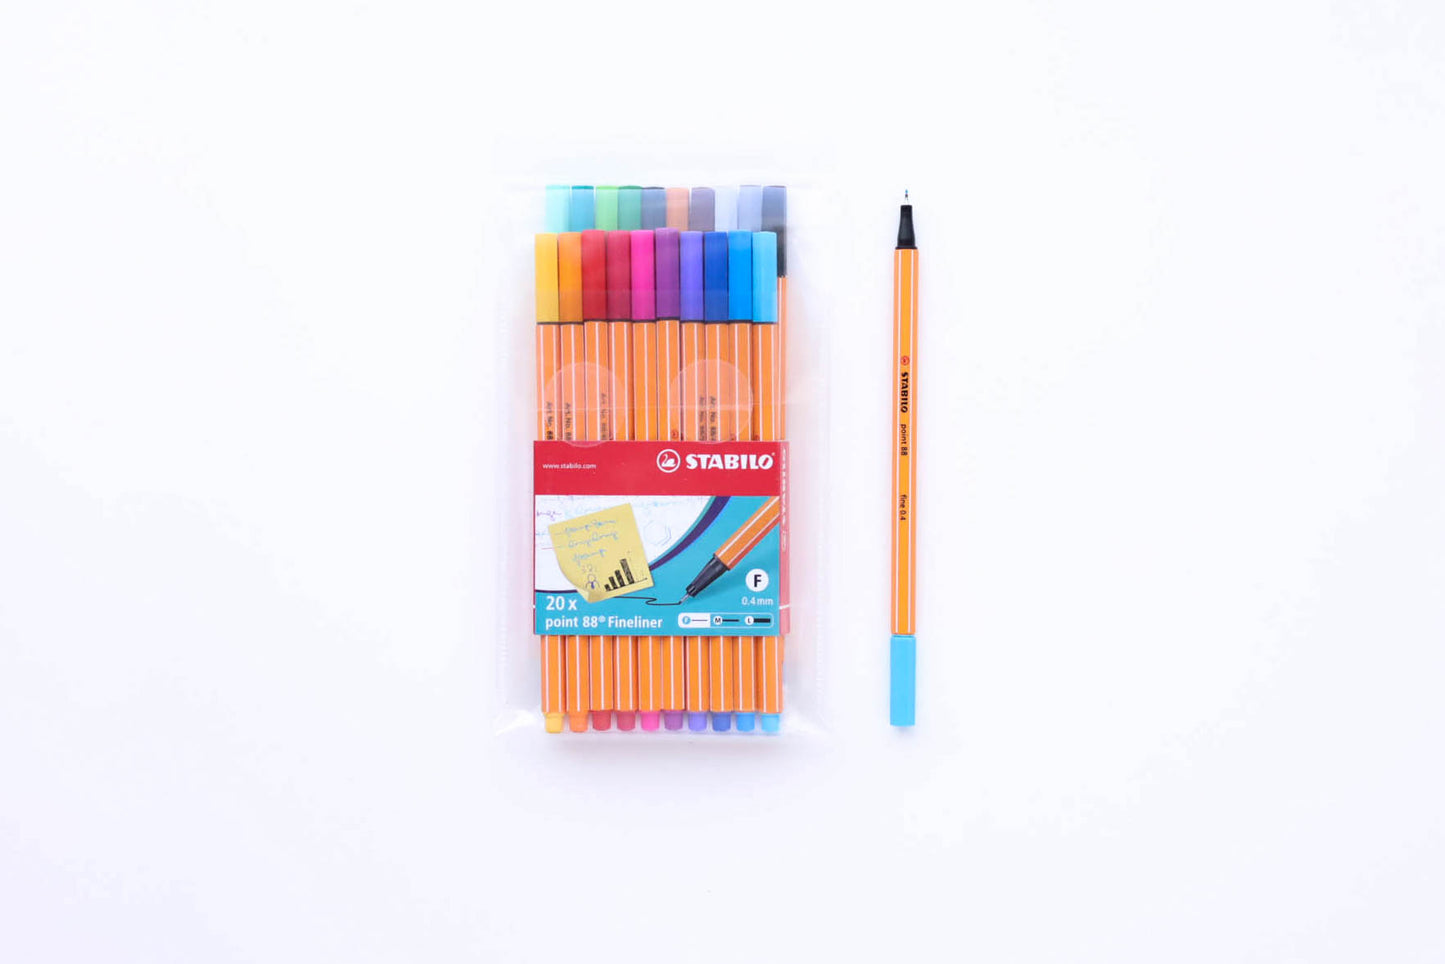 Stabilo Point 88 Fineliner Felt Tip Pens | 16 Colors